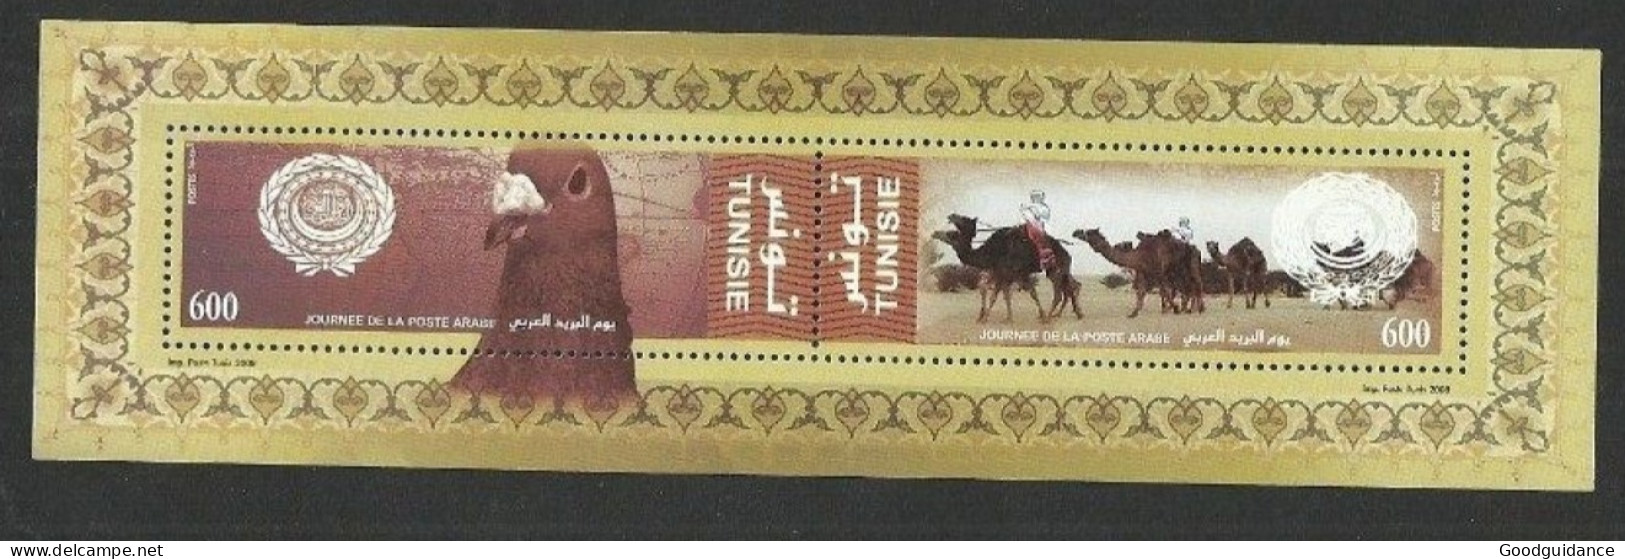 2008- Tunisia-  Minisheet  - Arab Post Day 2008 - Bird - Camel - Desert - MNH** - Joint Issues